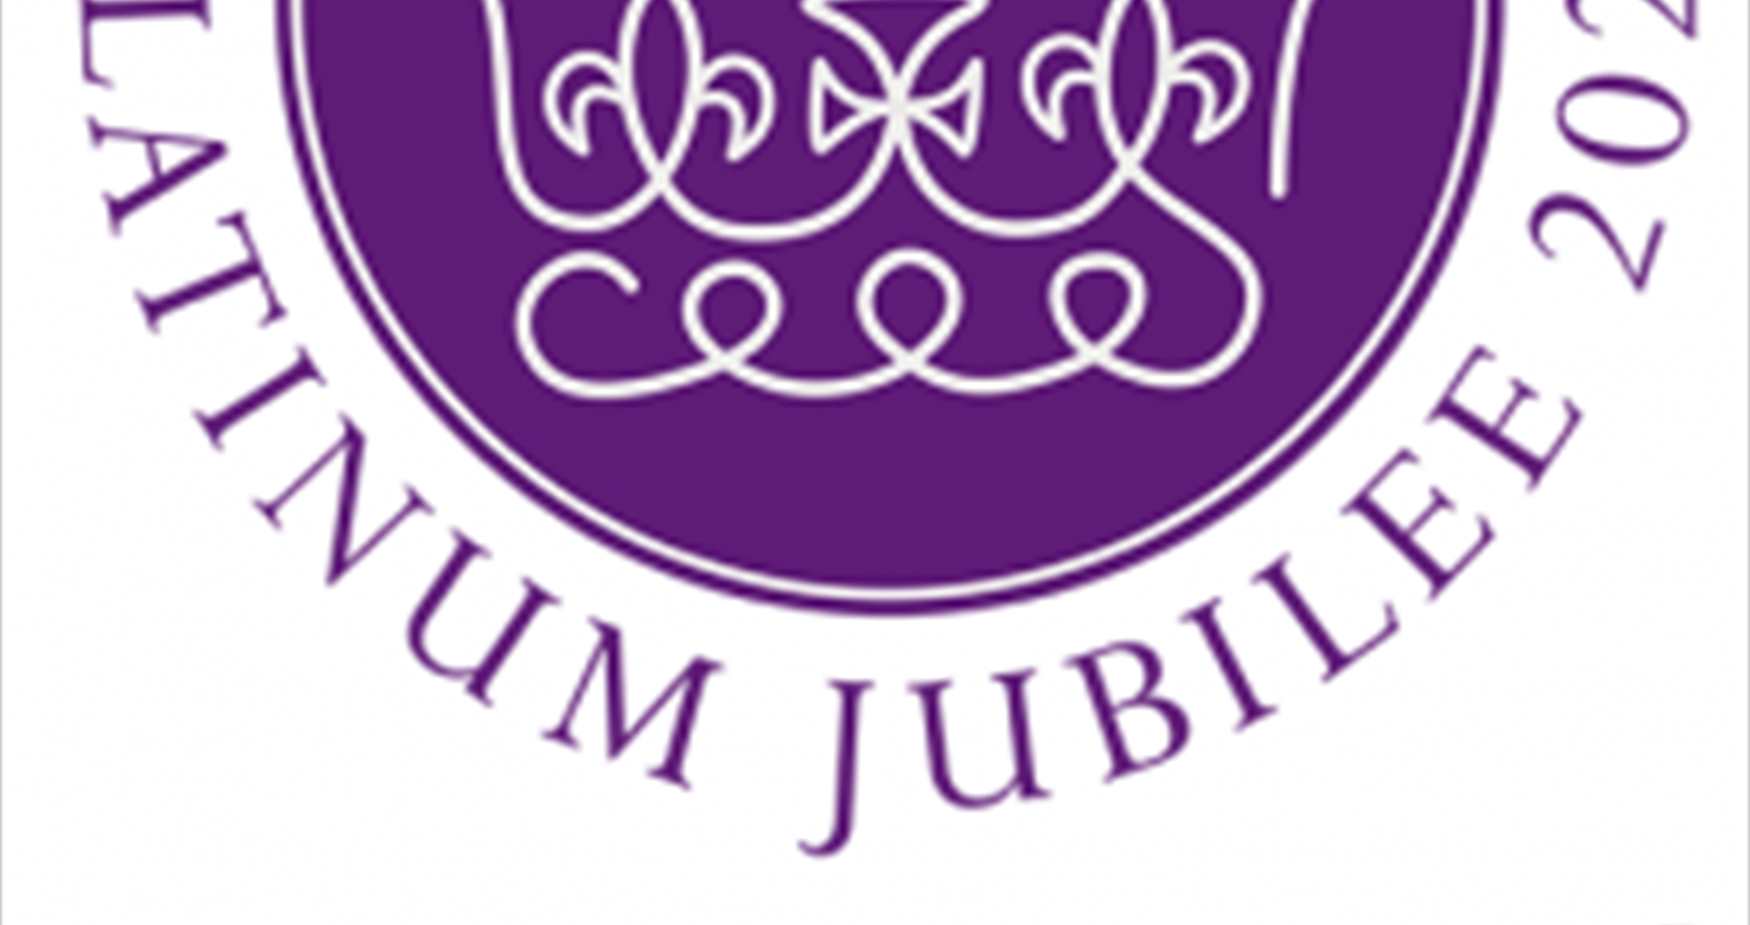 Her Majesty Queen Elizabeth's Platinum Jubilee Logo